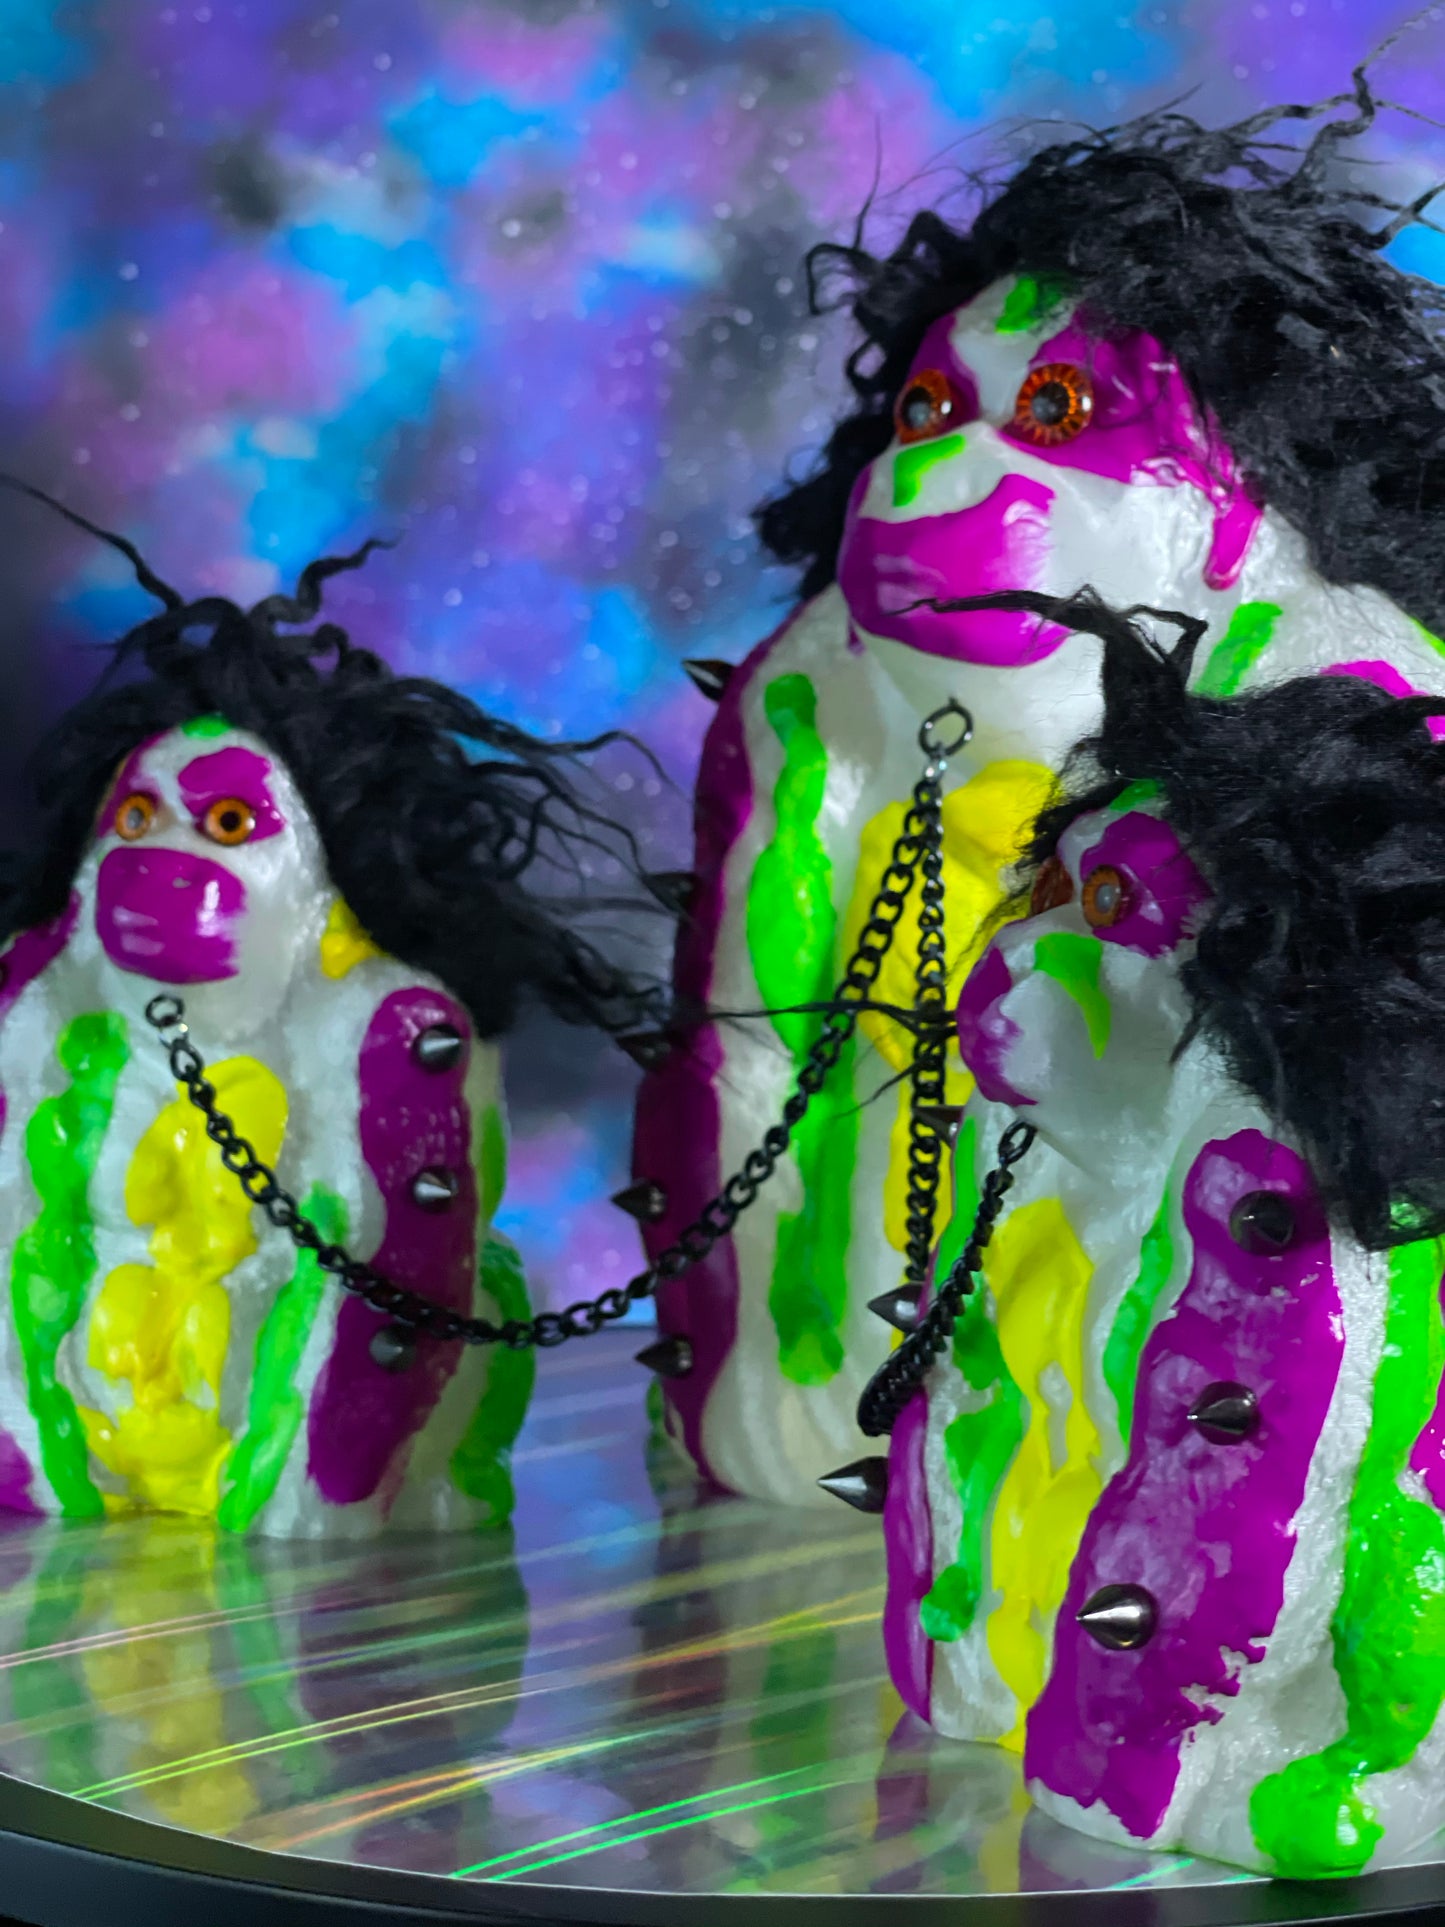 Gorilla Gang: The UV Reactive/Glow in the Dark Day